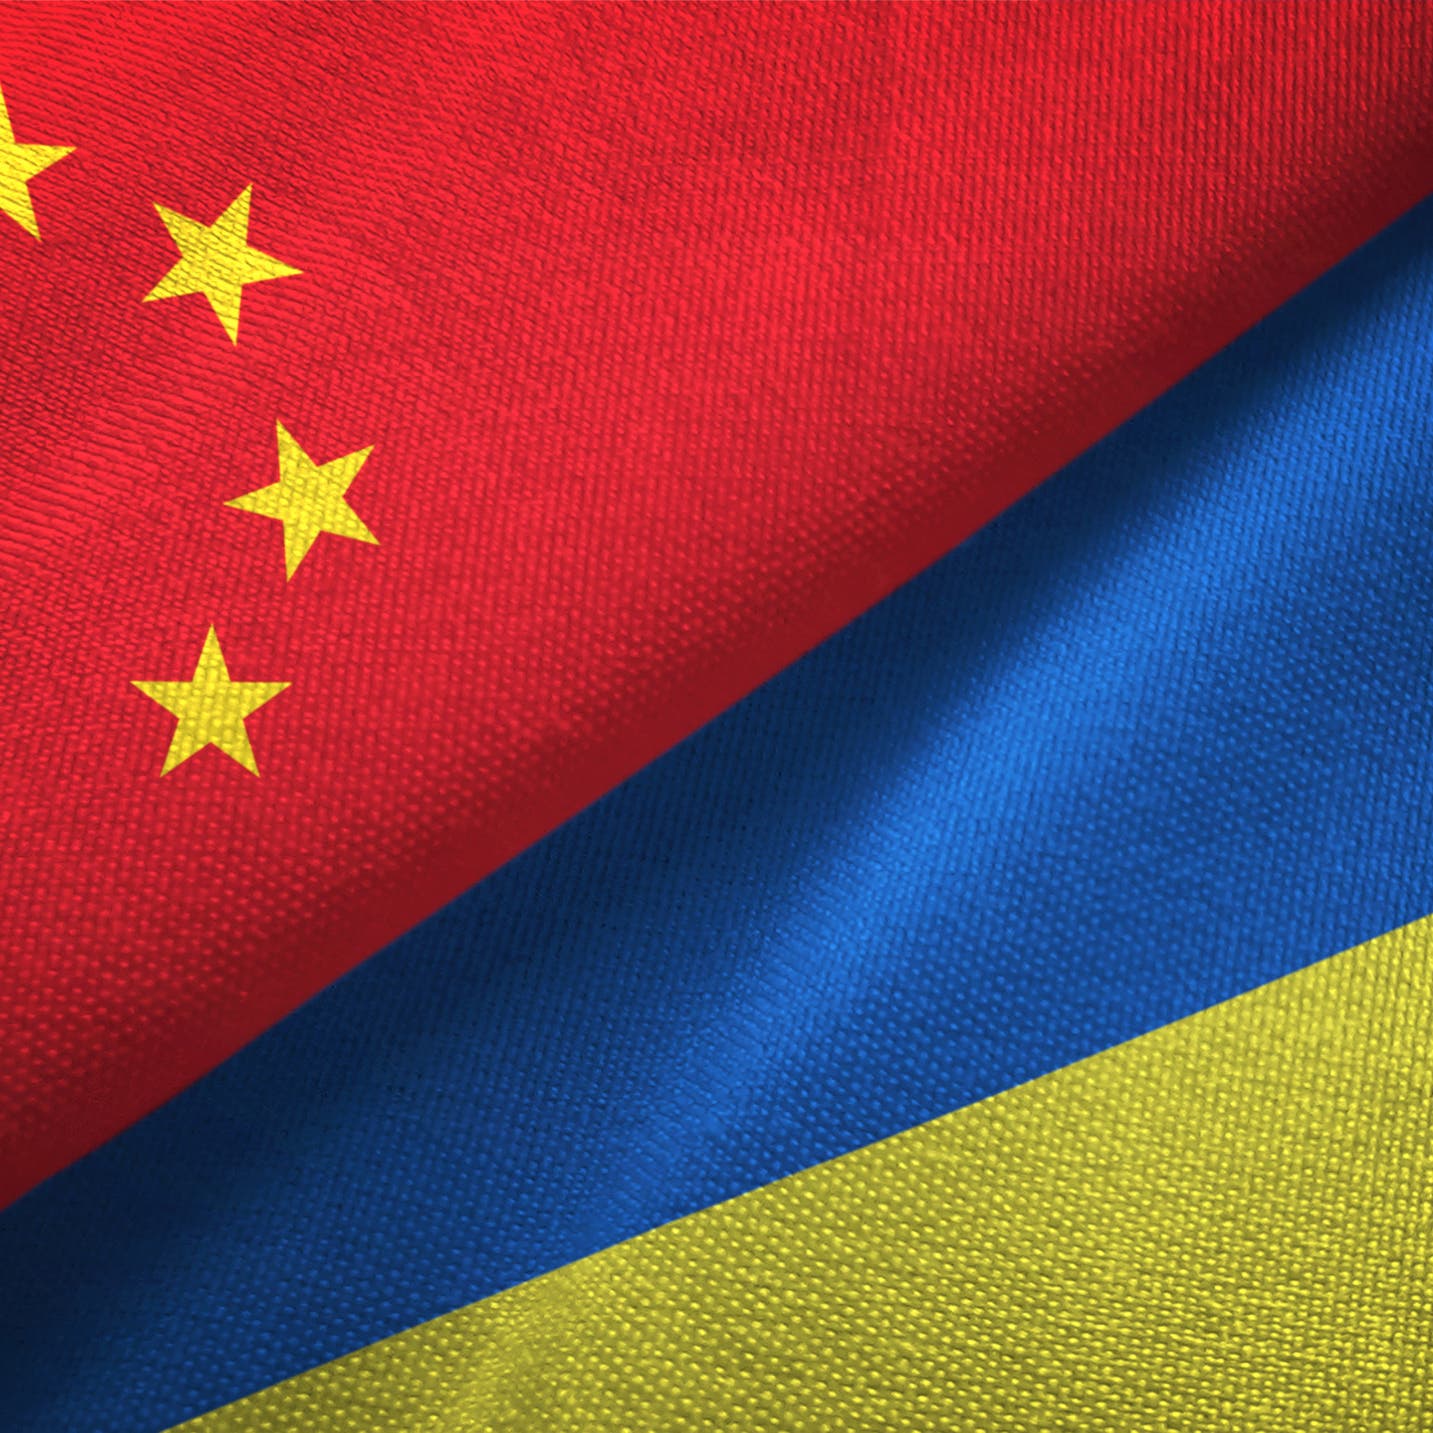 China calls for Russia-Ukraine ceasefire, peace talks